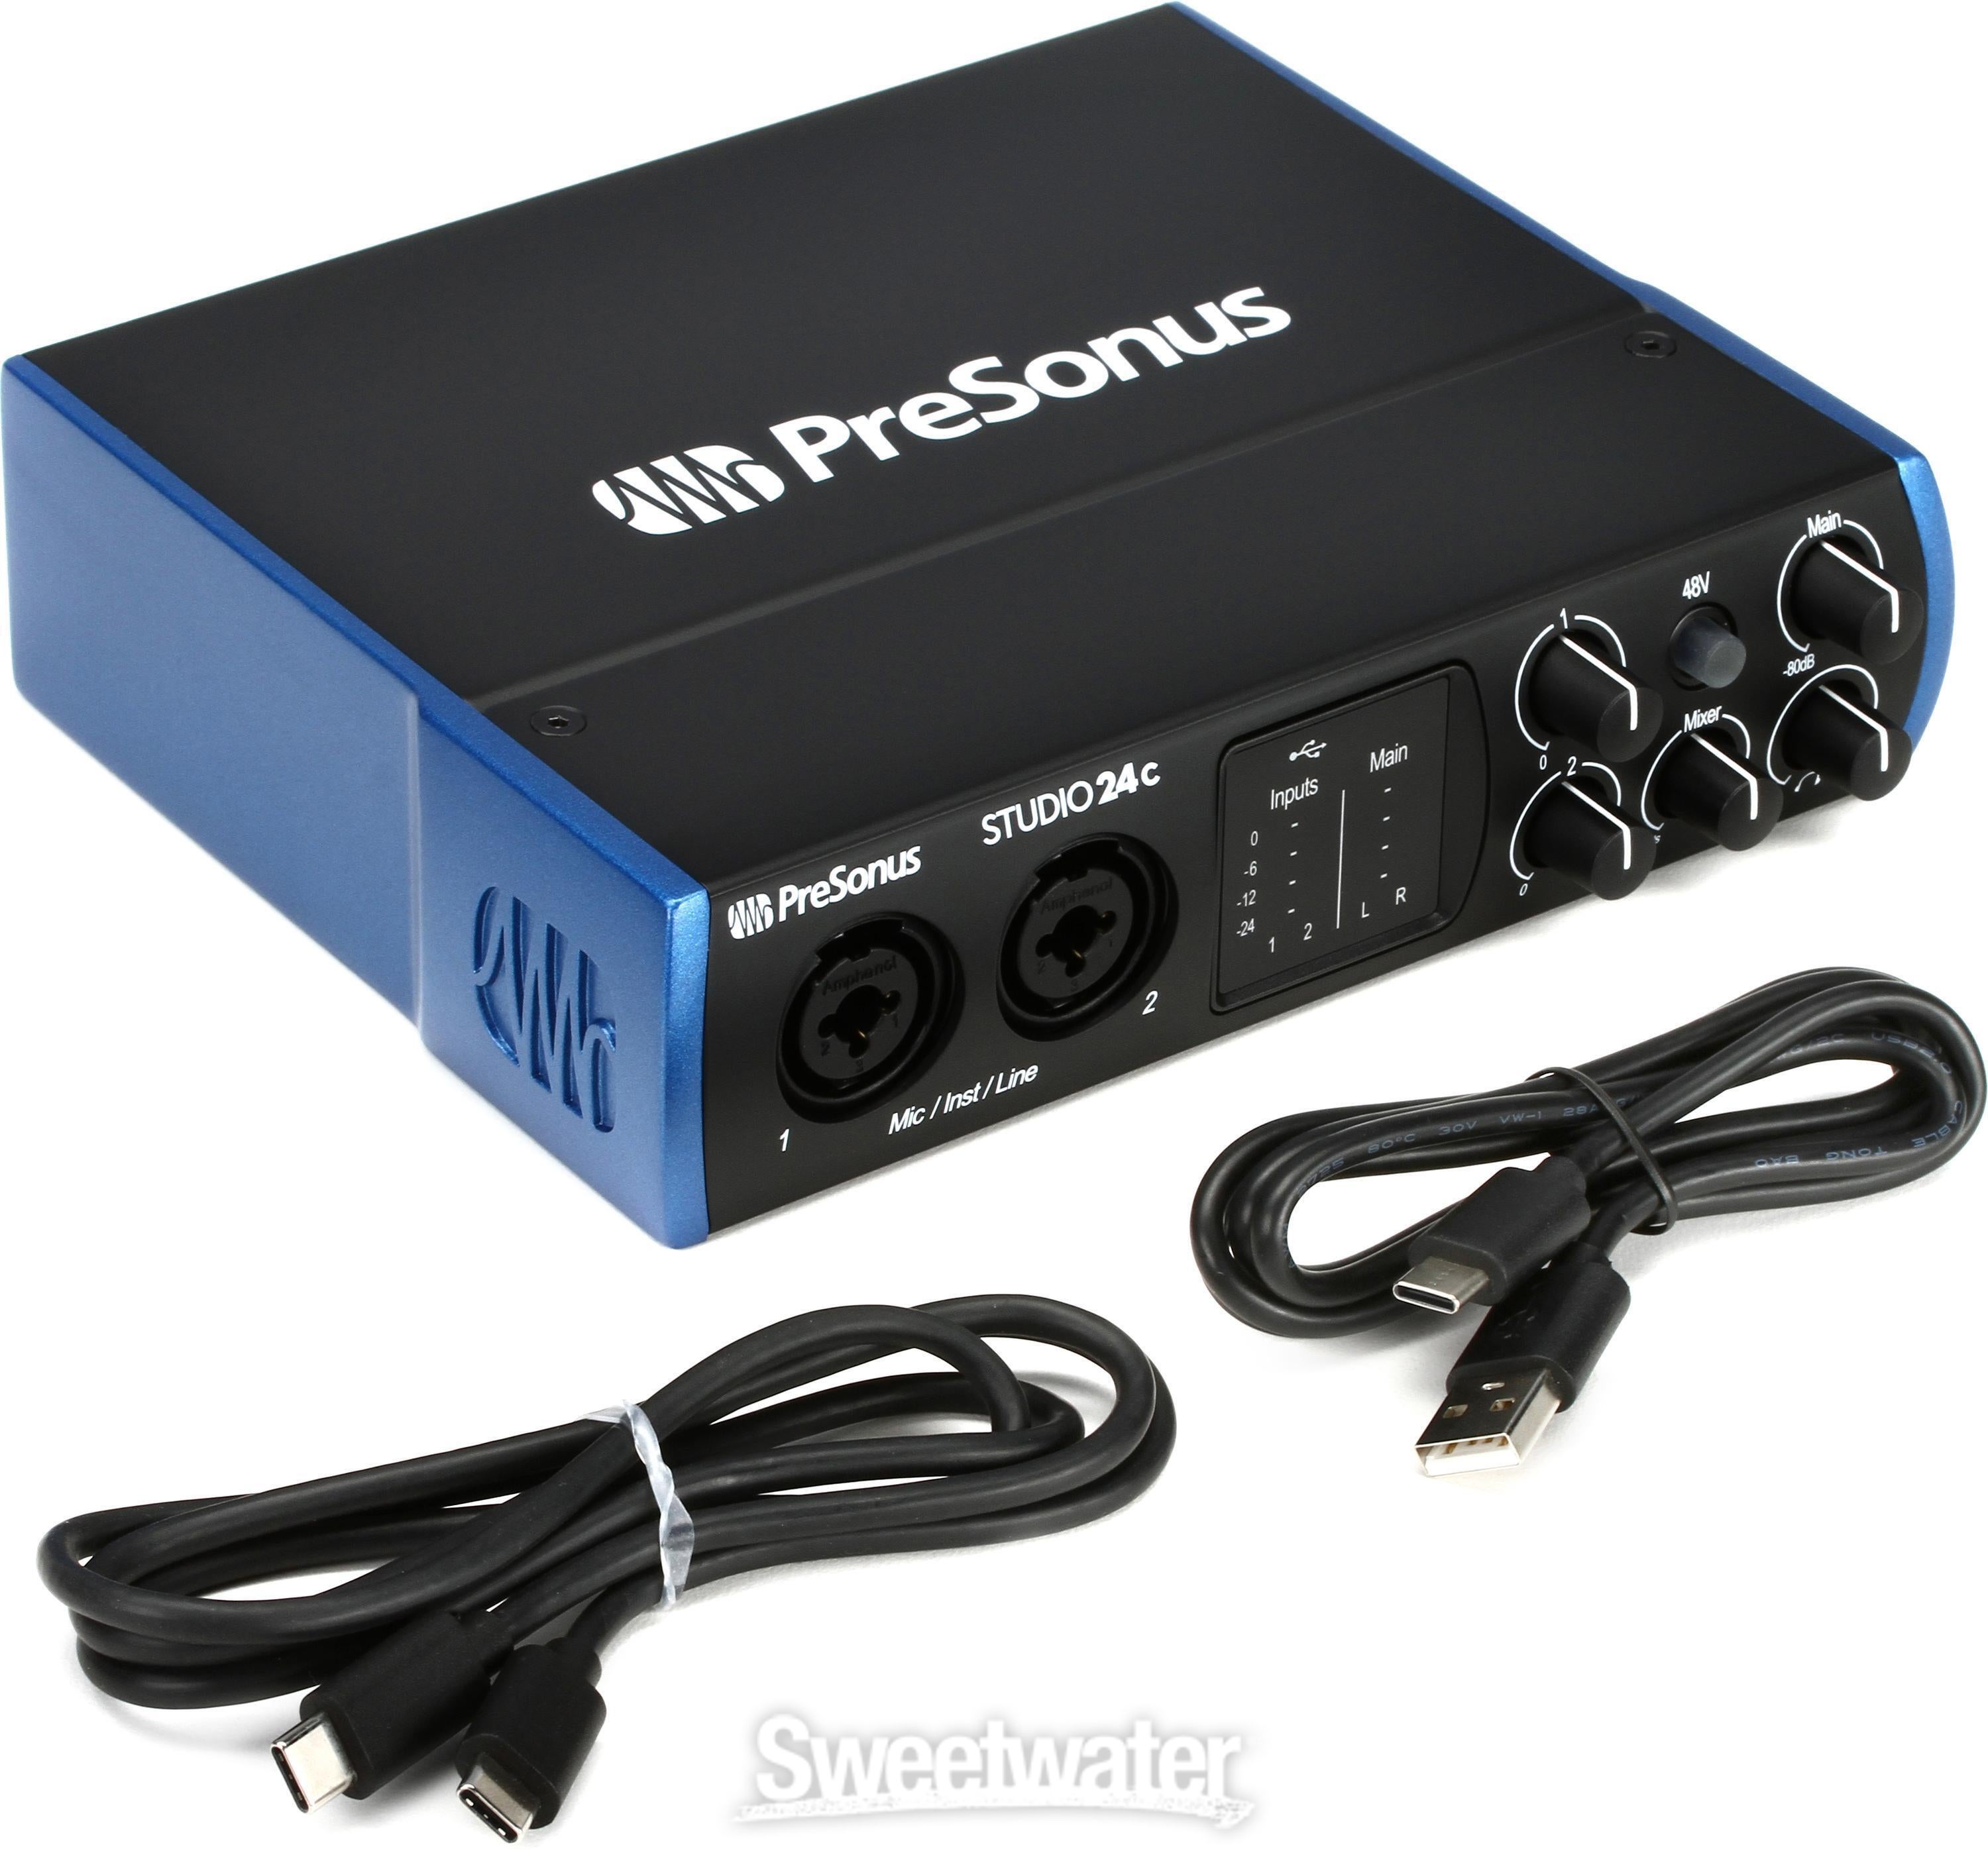 PreSonus Studio 24c USB-C Audio Interface | Sweetwater